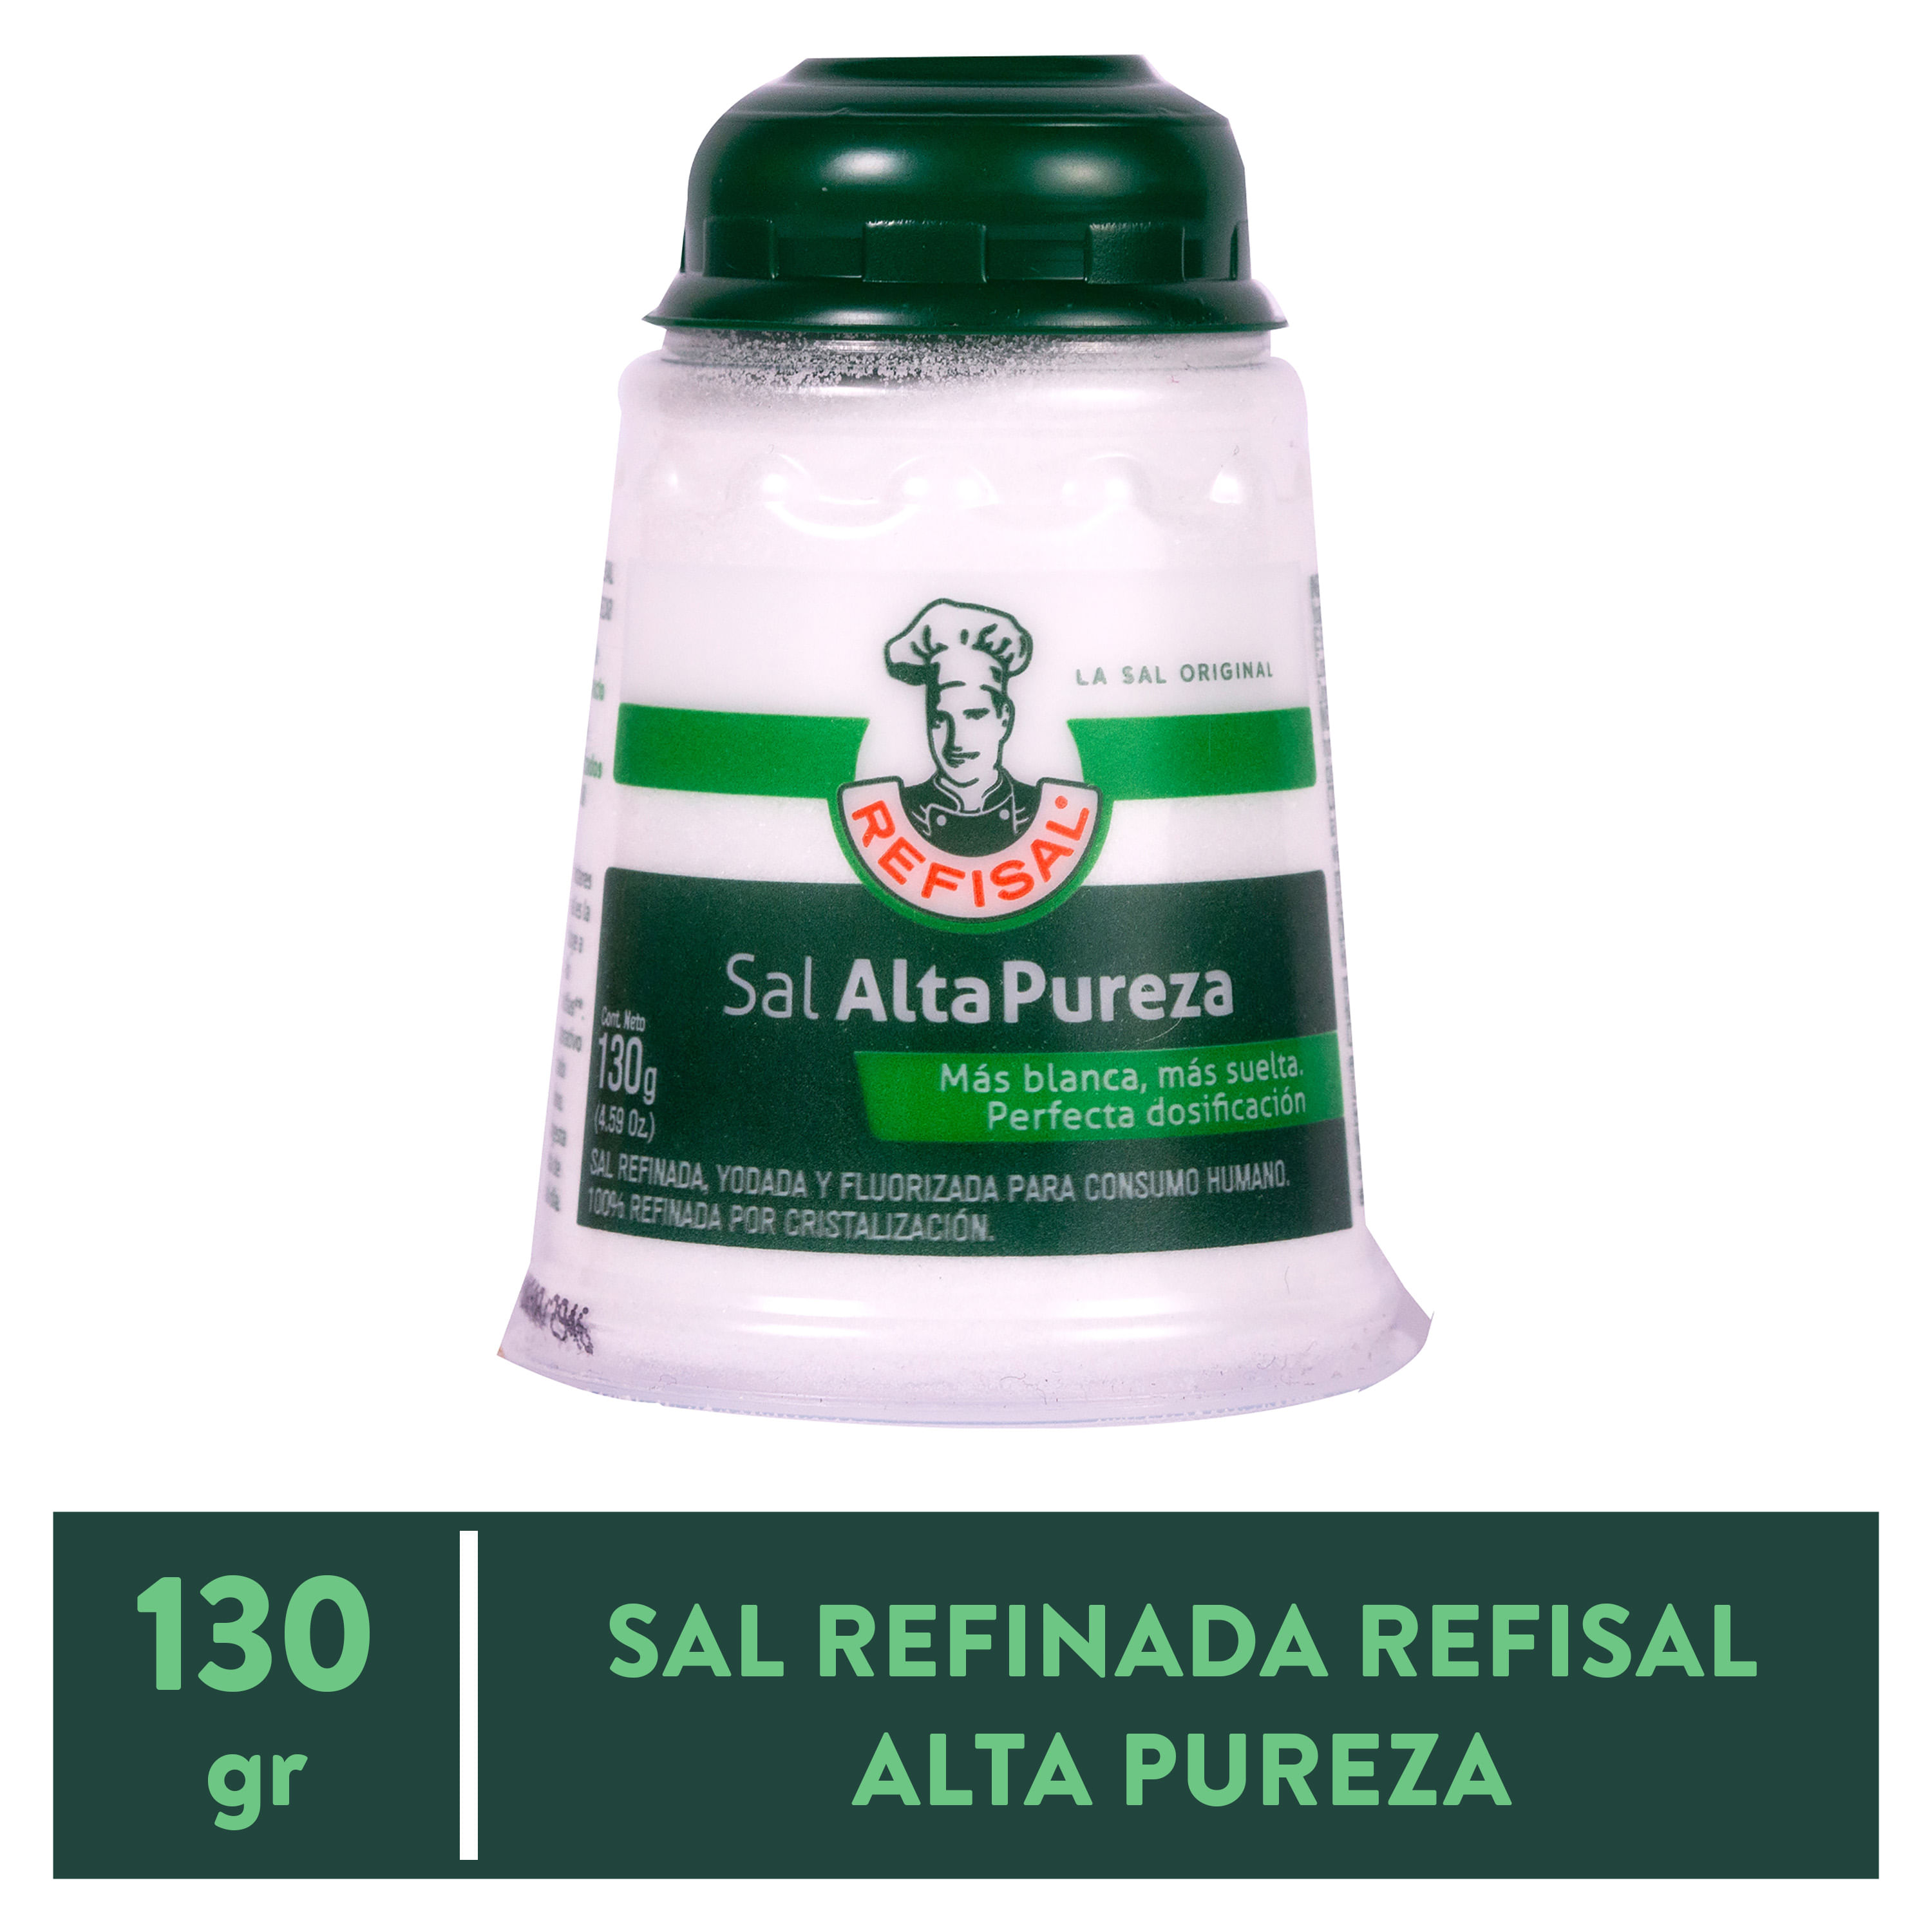 Sal-Refinada-Refisal-Alta-Pureza-130Gr-1-27884